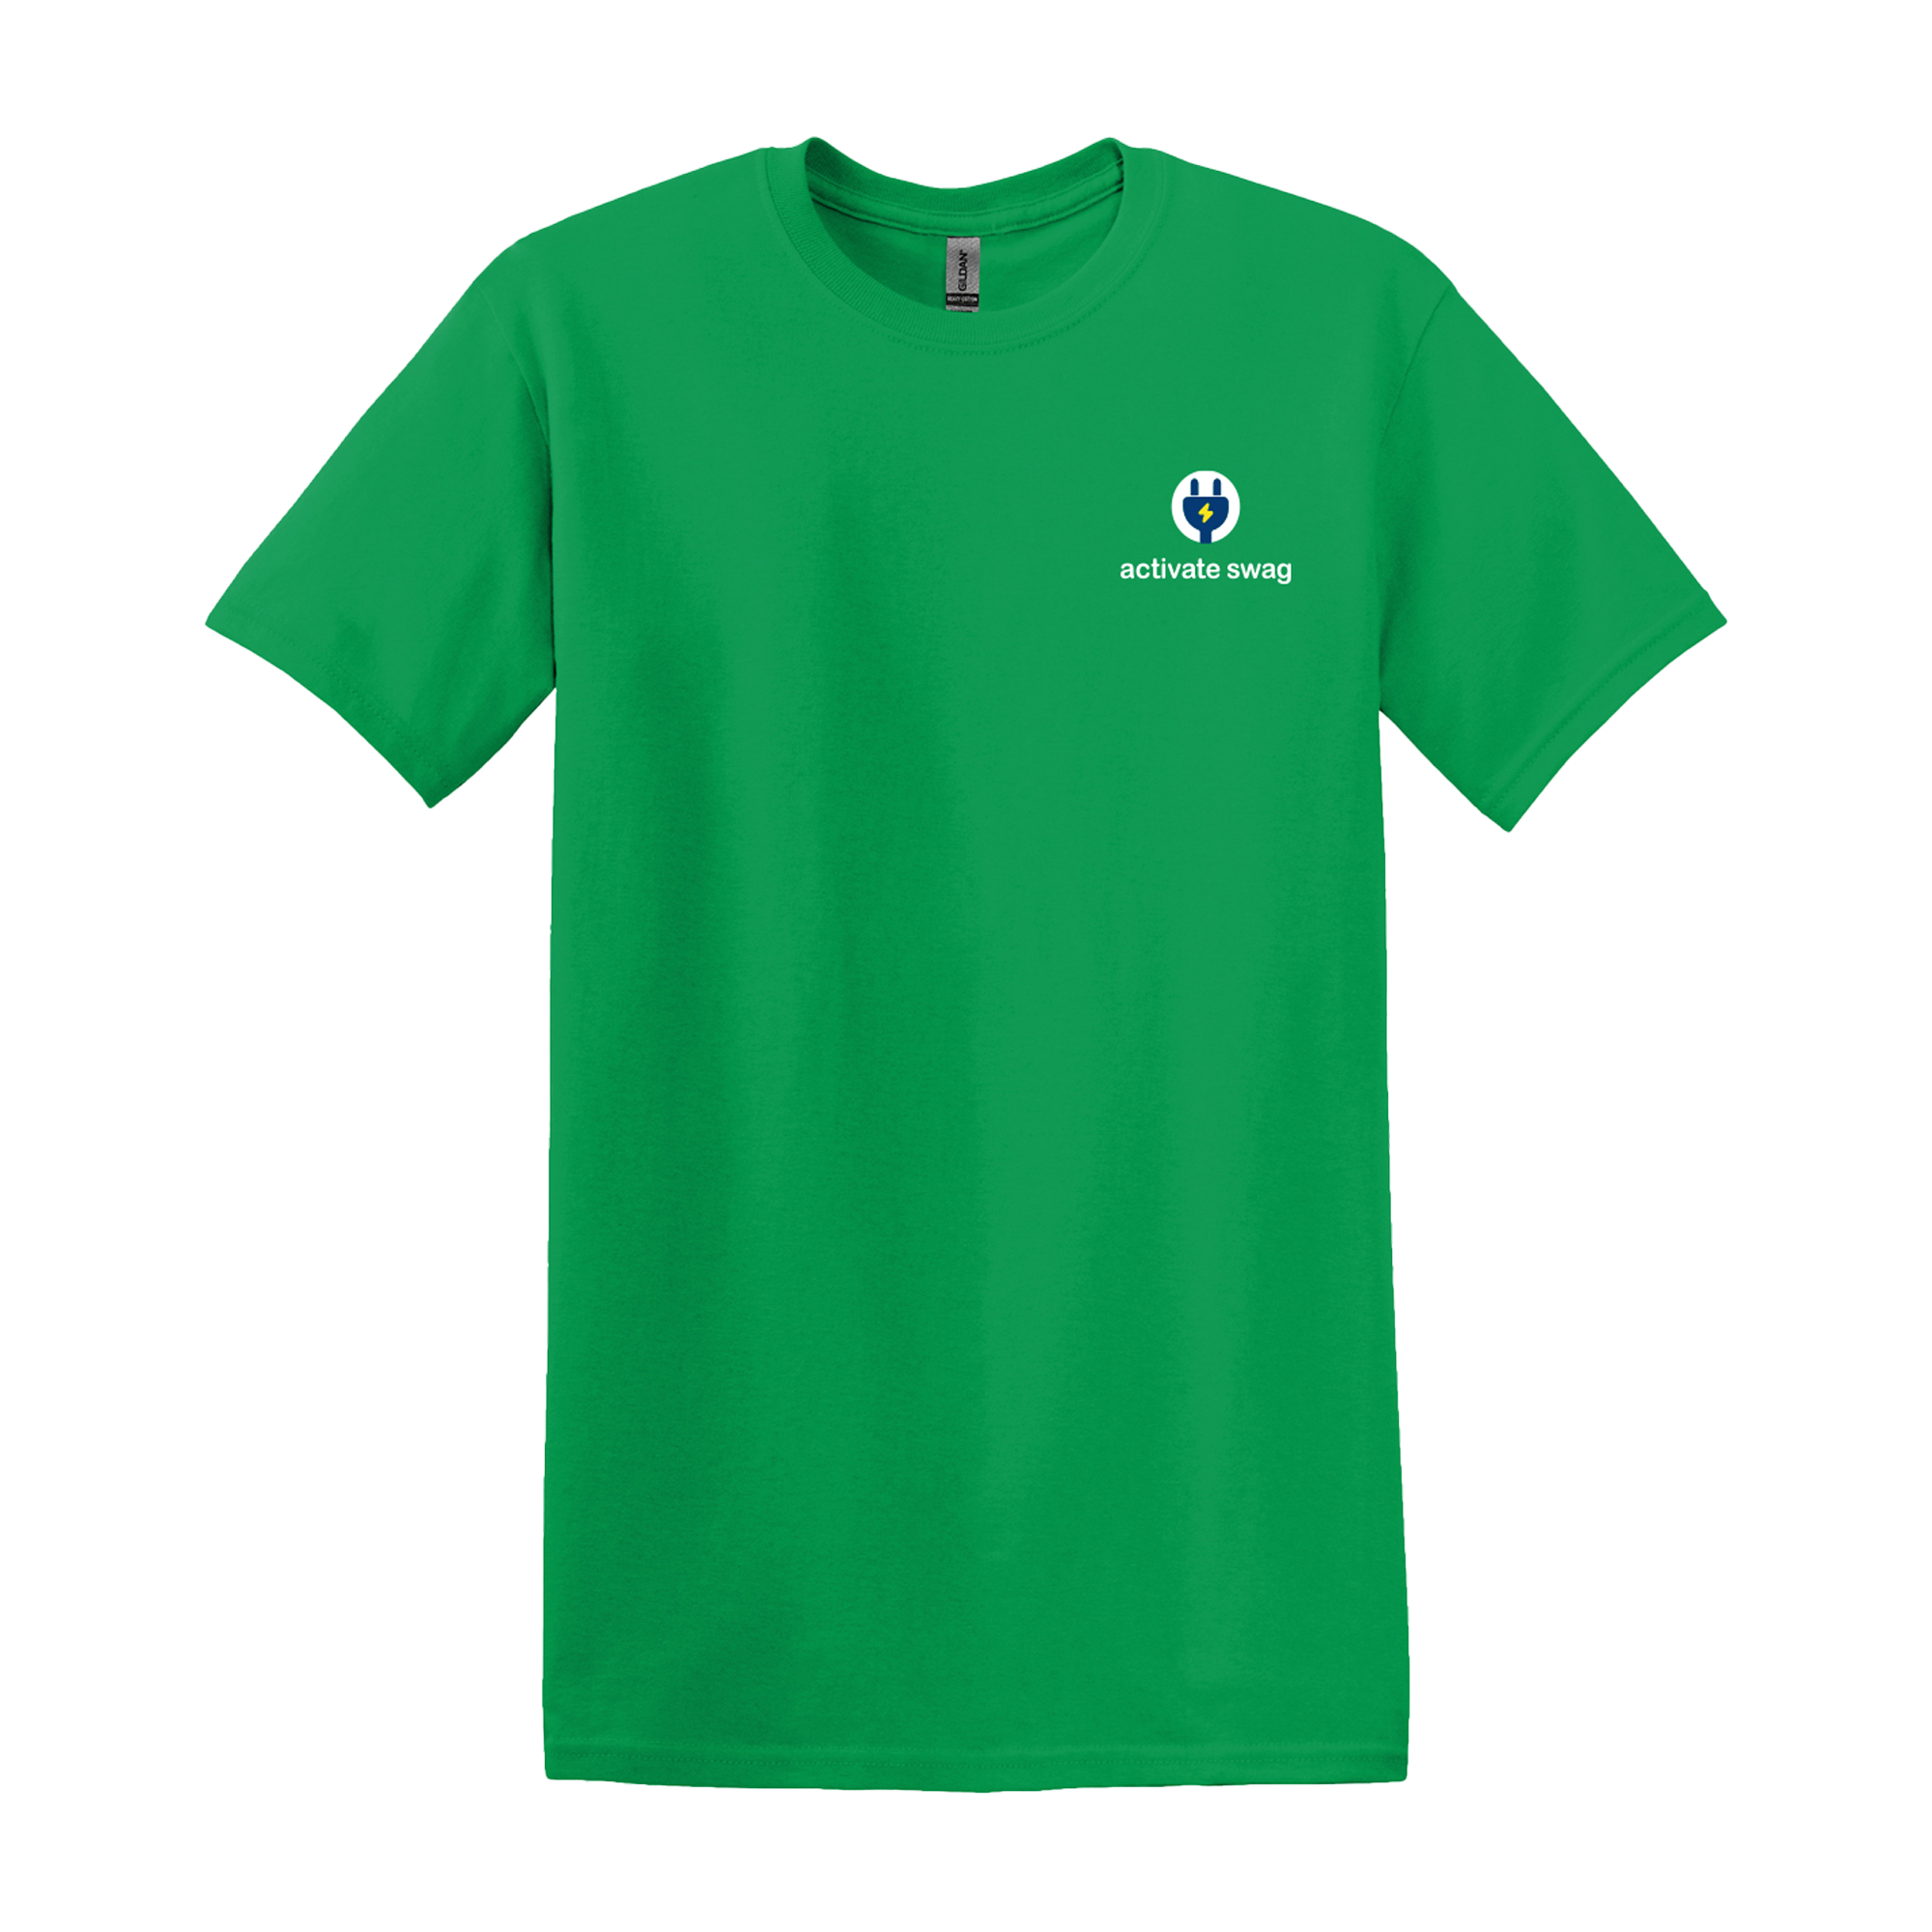 Gildan Basic T-shirt